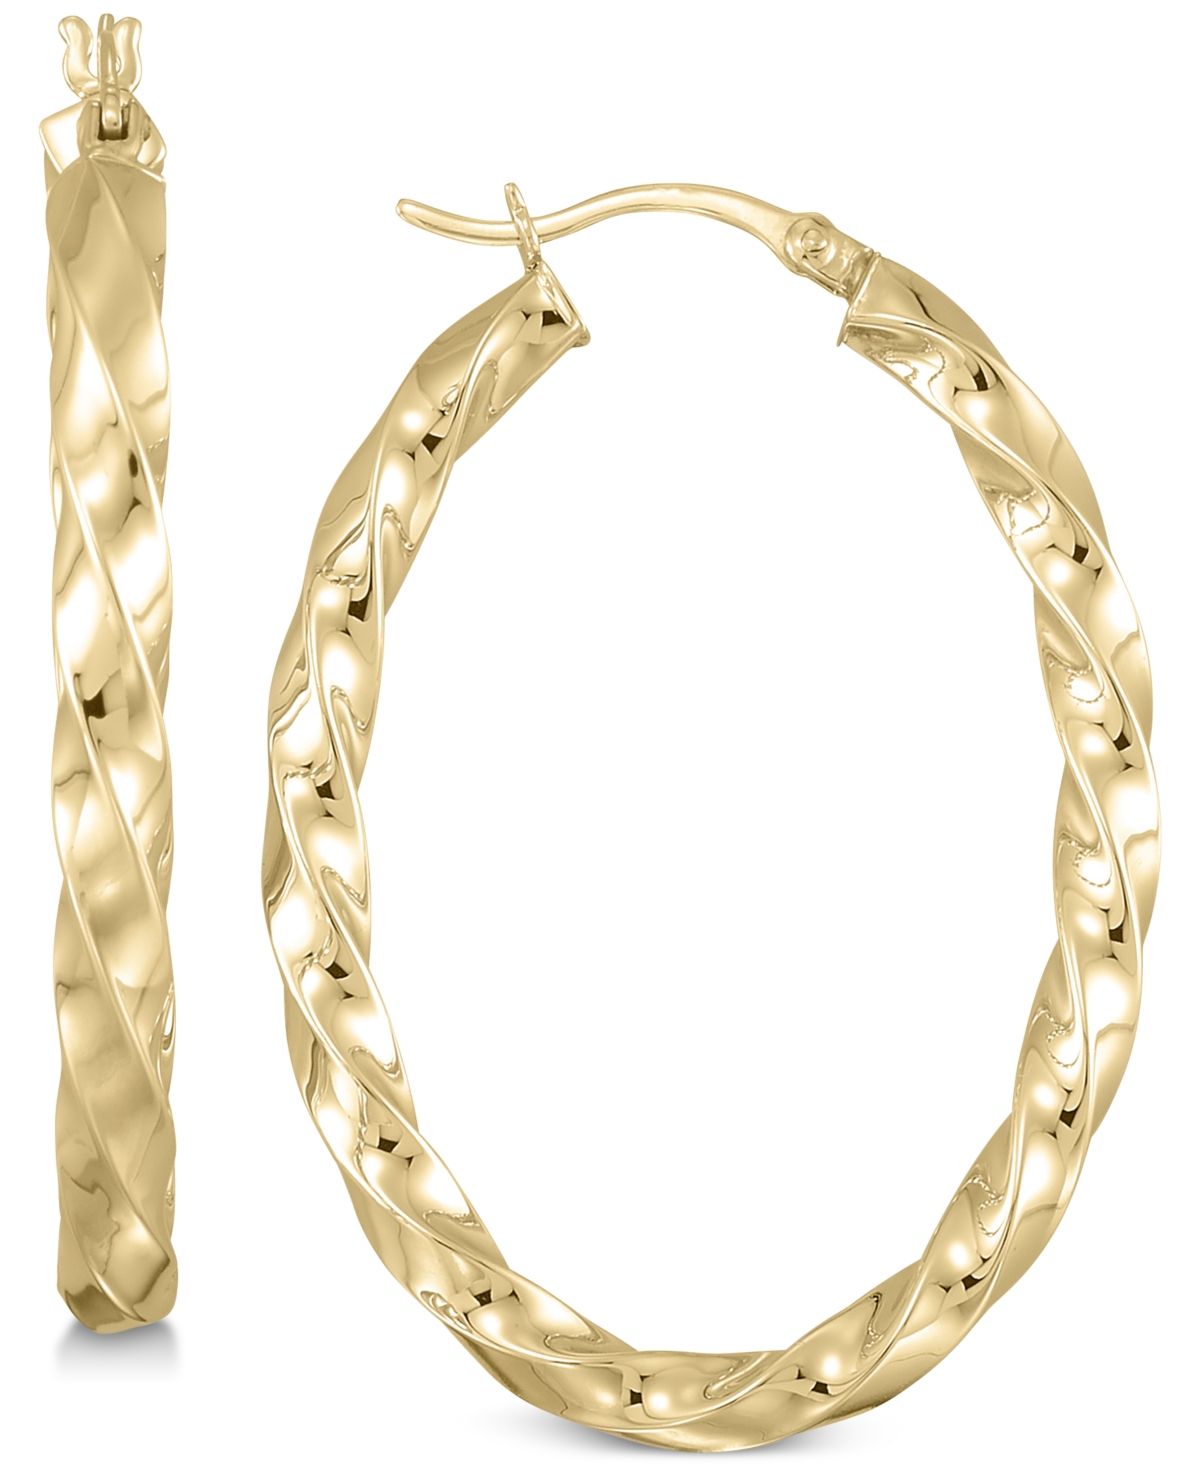 Twist Hoop Earrings in 18k Gold over Sterling Silver - Gold Over Silver